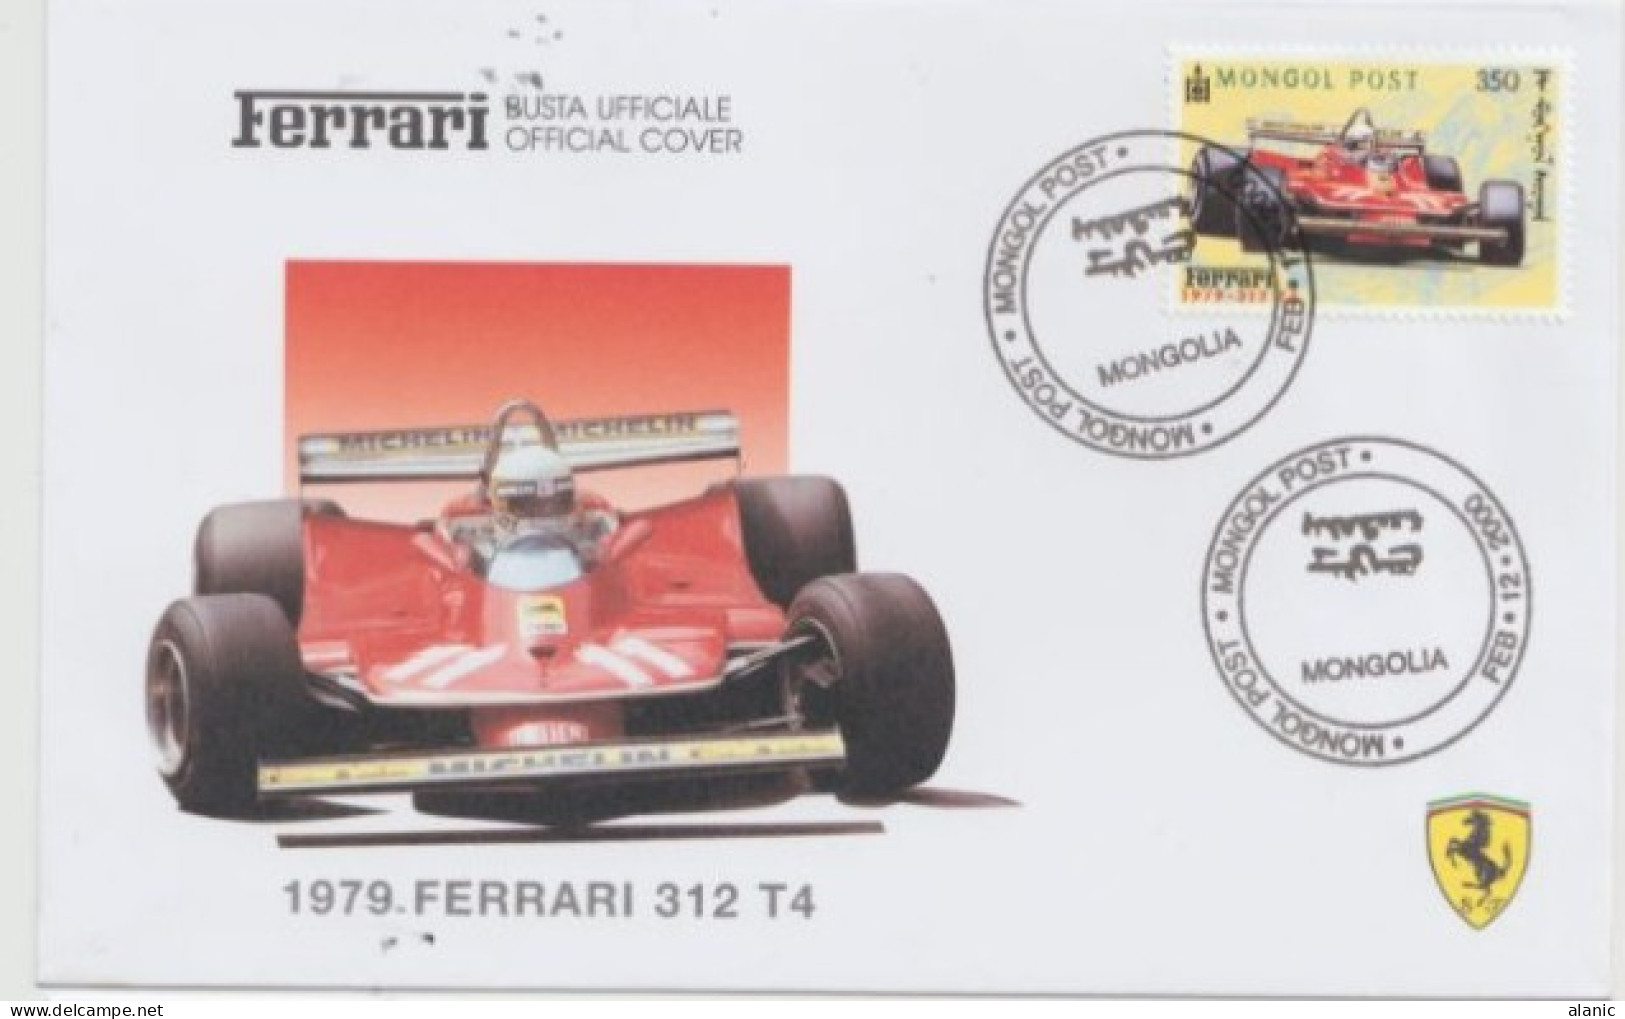 Mongol Post 12/02/2000-FDC-Enzo Ferrari-AUTOMOBILES FERRARI-SERIE DE 6 VALEURS-TBE--AUTOMOB - Cars